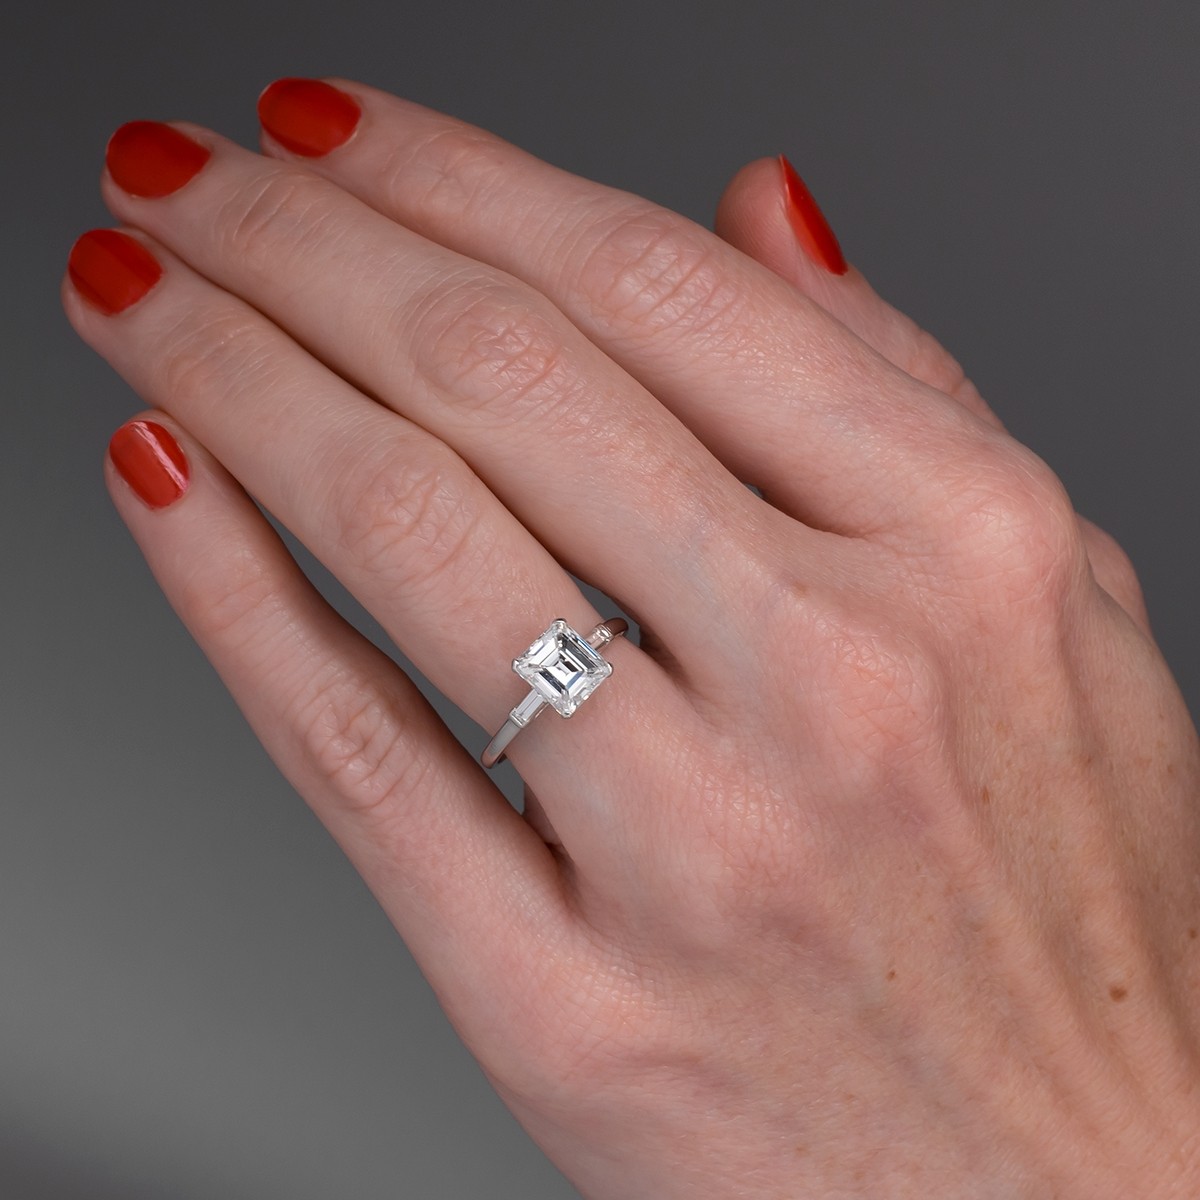 Bij plaag Reis Cartier Emerald Cut Engagement Ring Best Sale, UP TO 54% OFF |  www.editorialelpirata.com